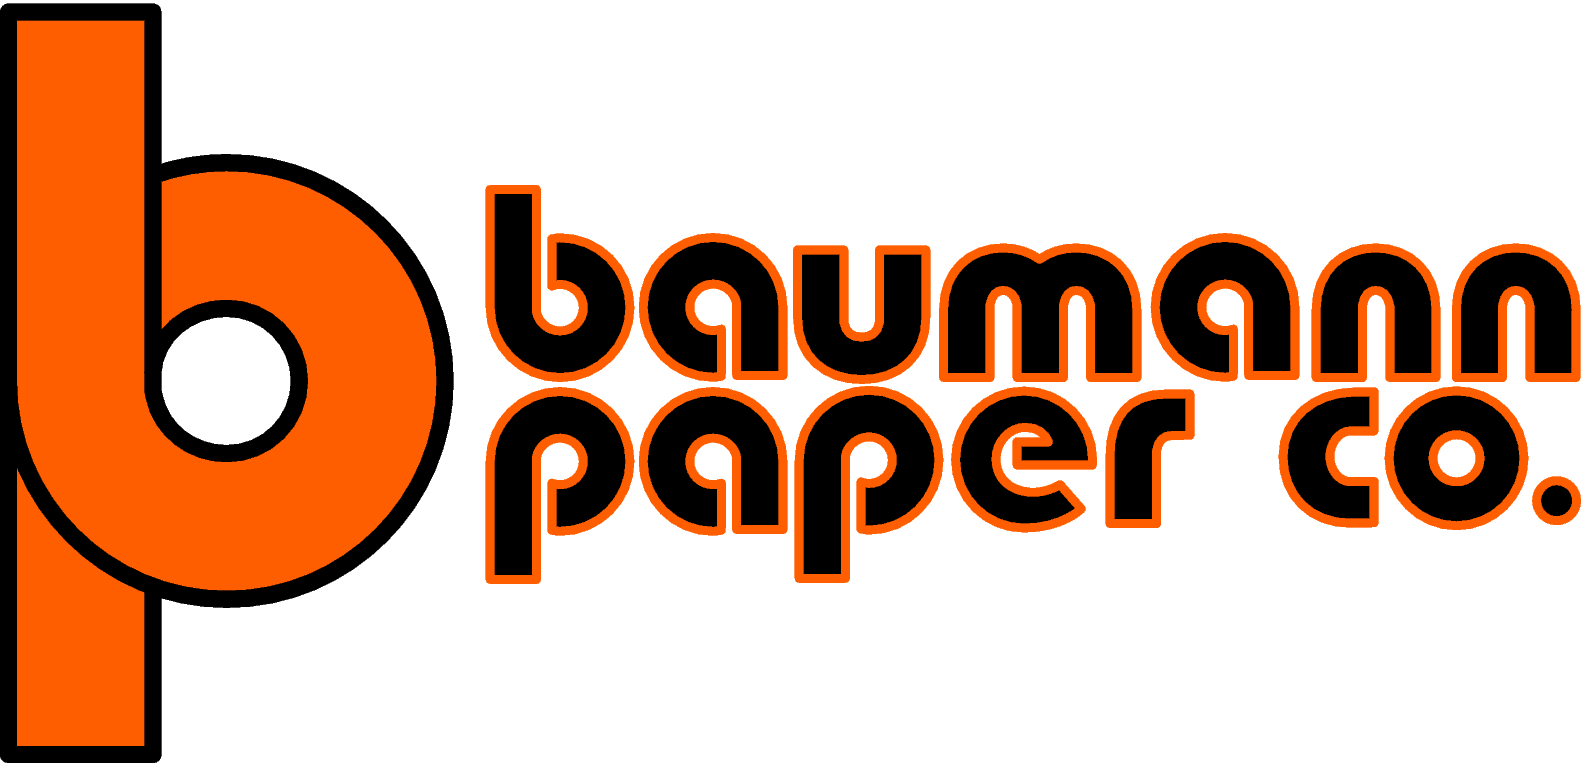 Baumann Paper Company